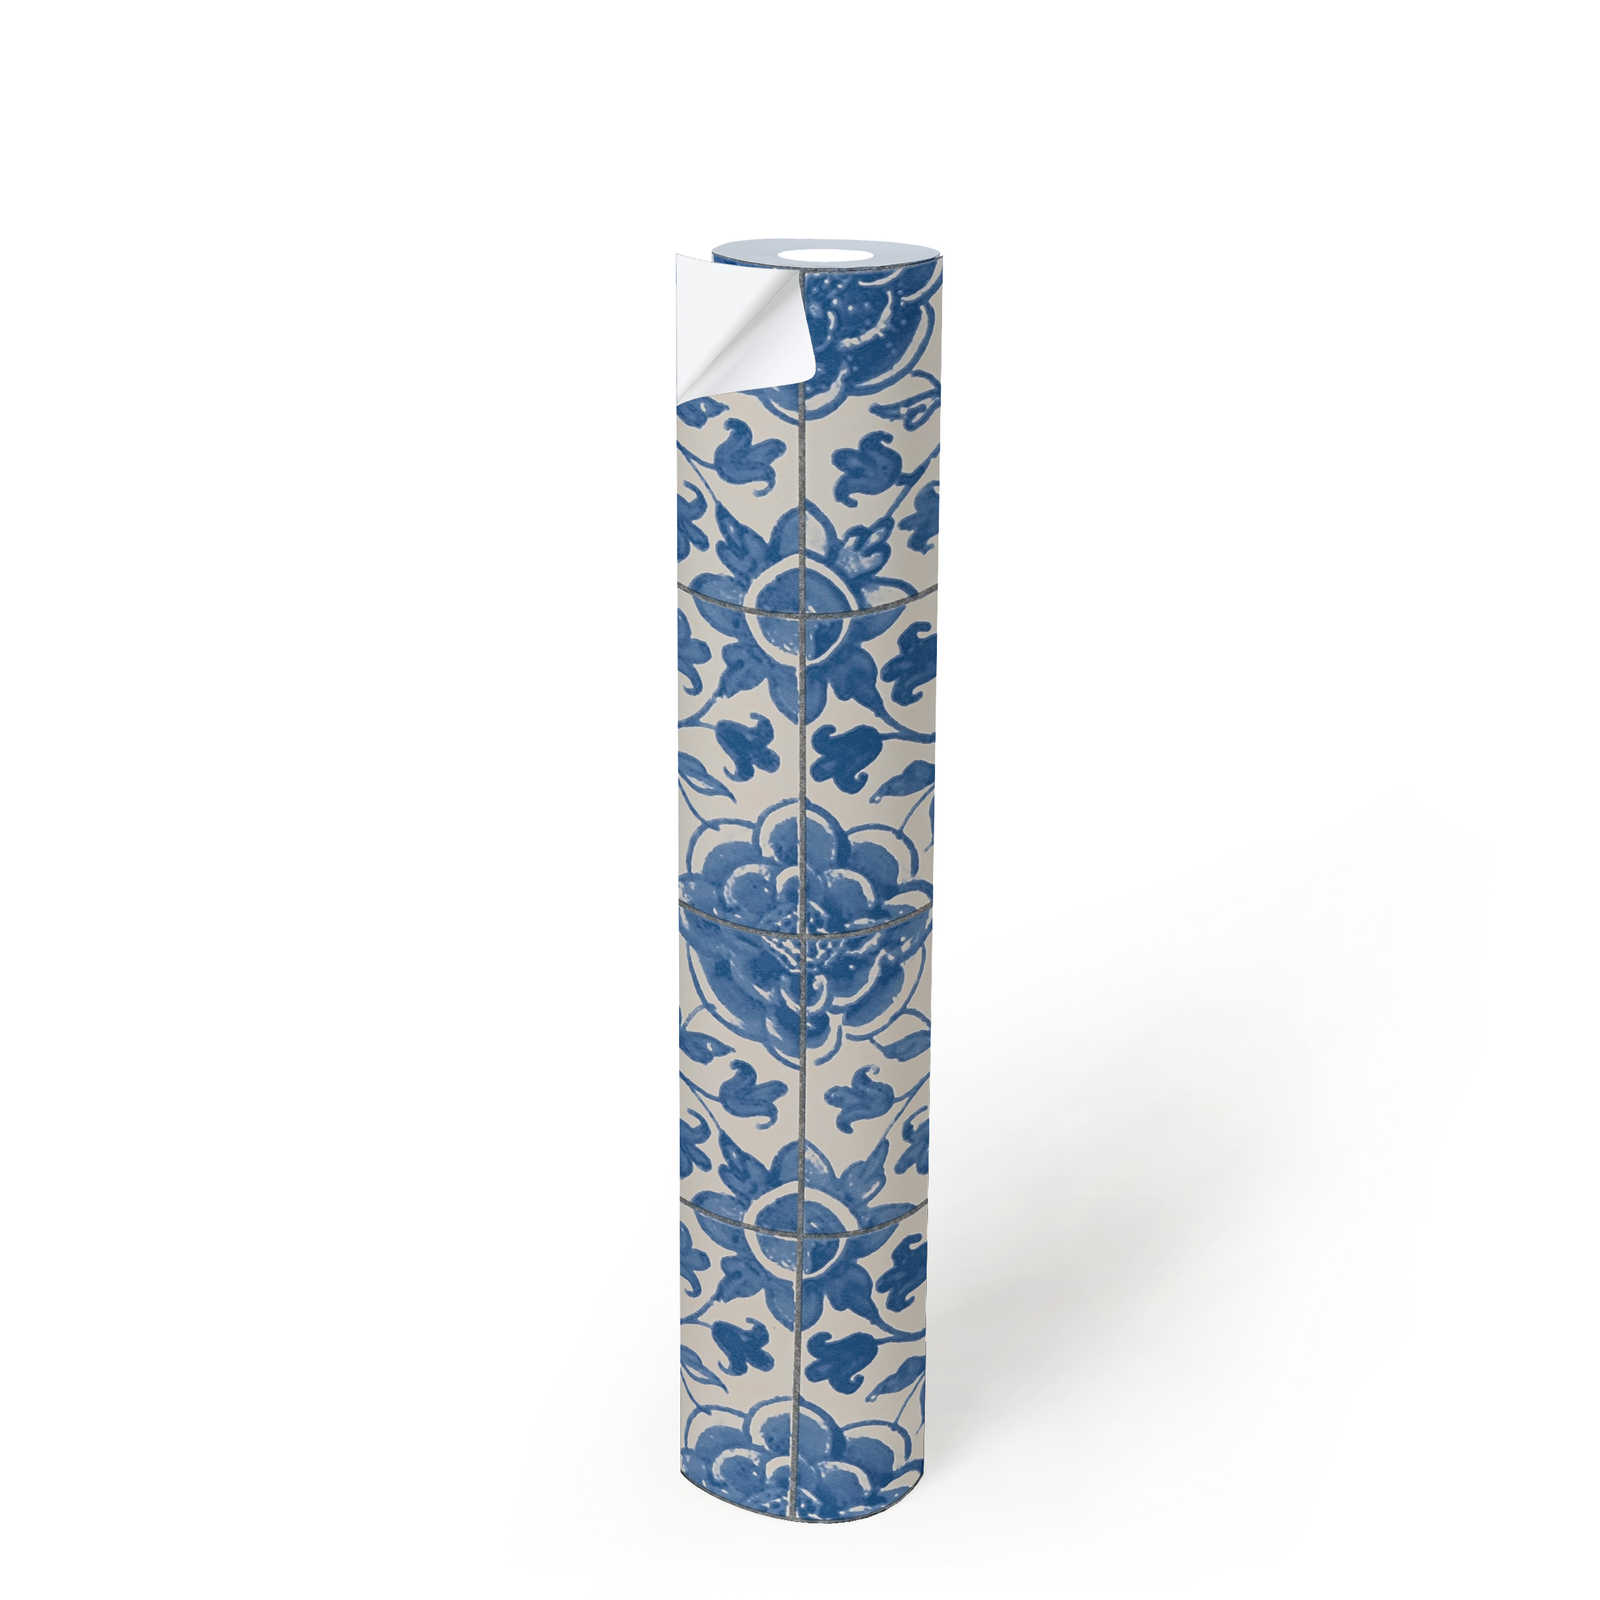             Selbstklebende Tapete | Fliesenoptik im Vintage Stil – Blau, Weiß
        